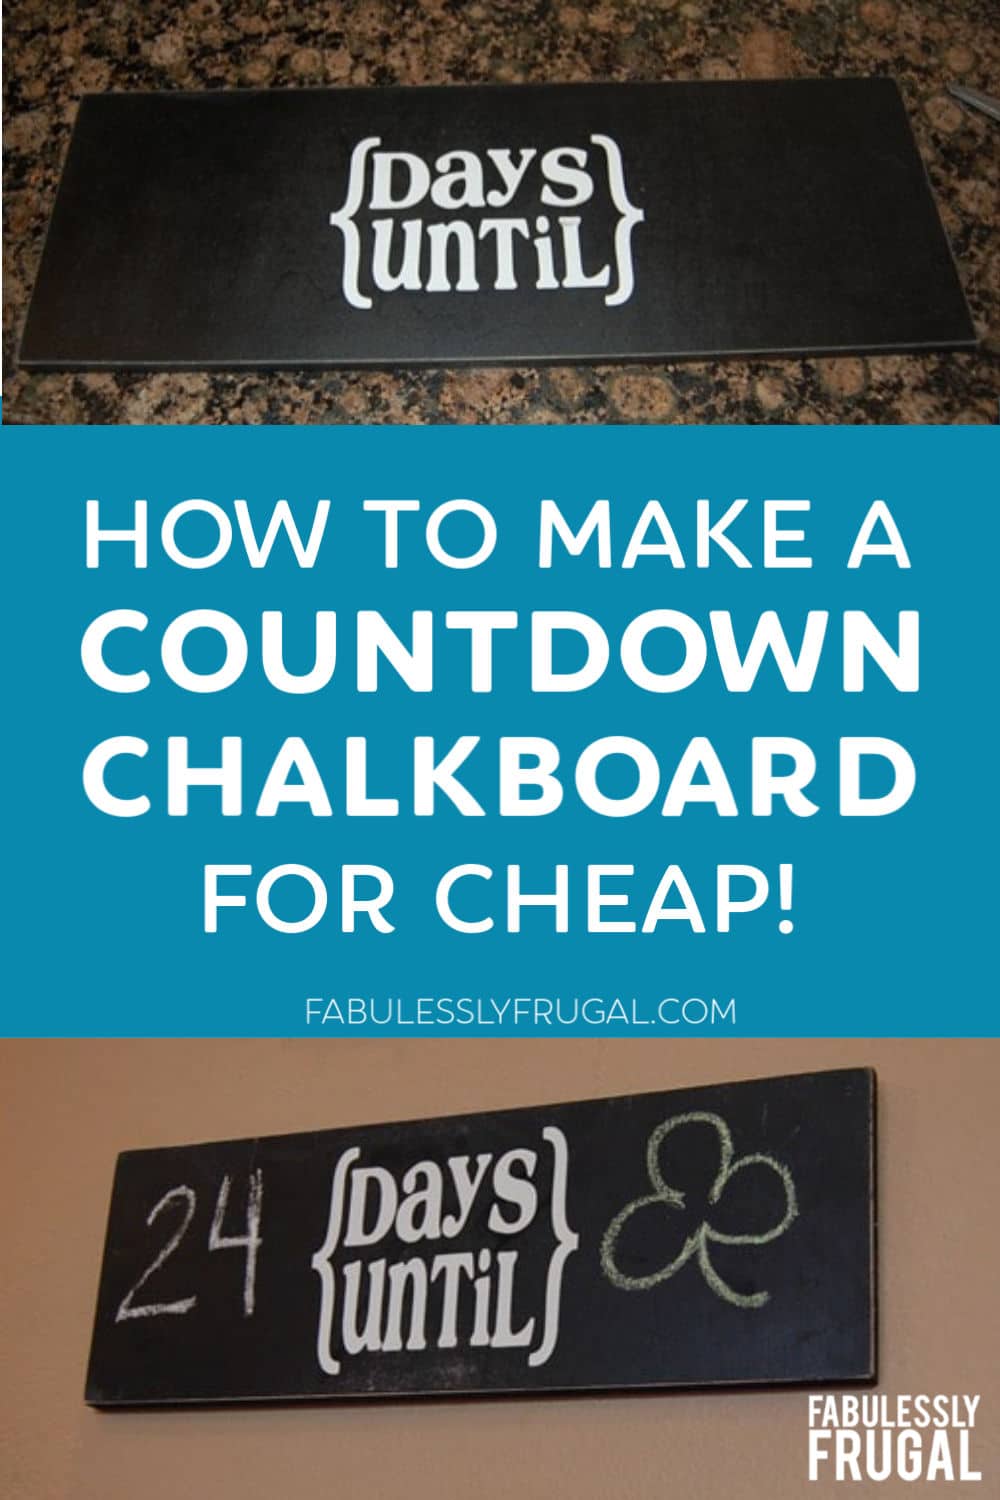 Countdown chalkboard sign